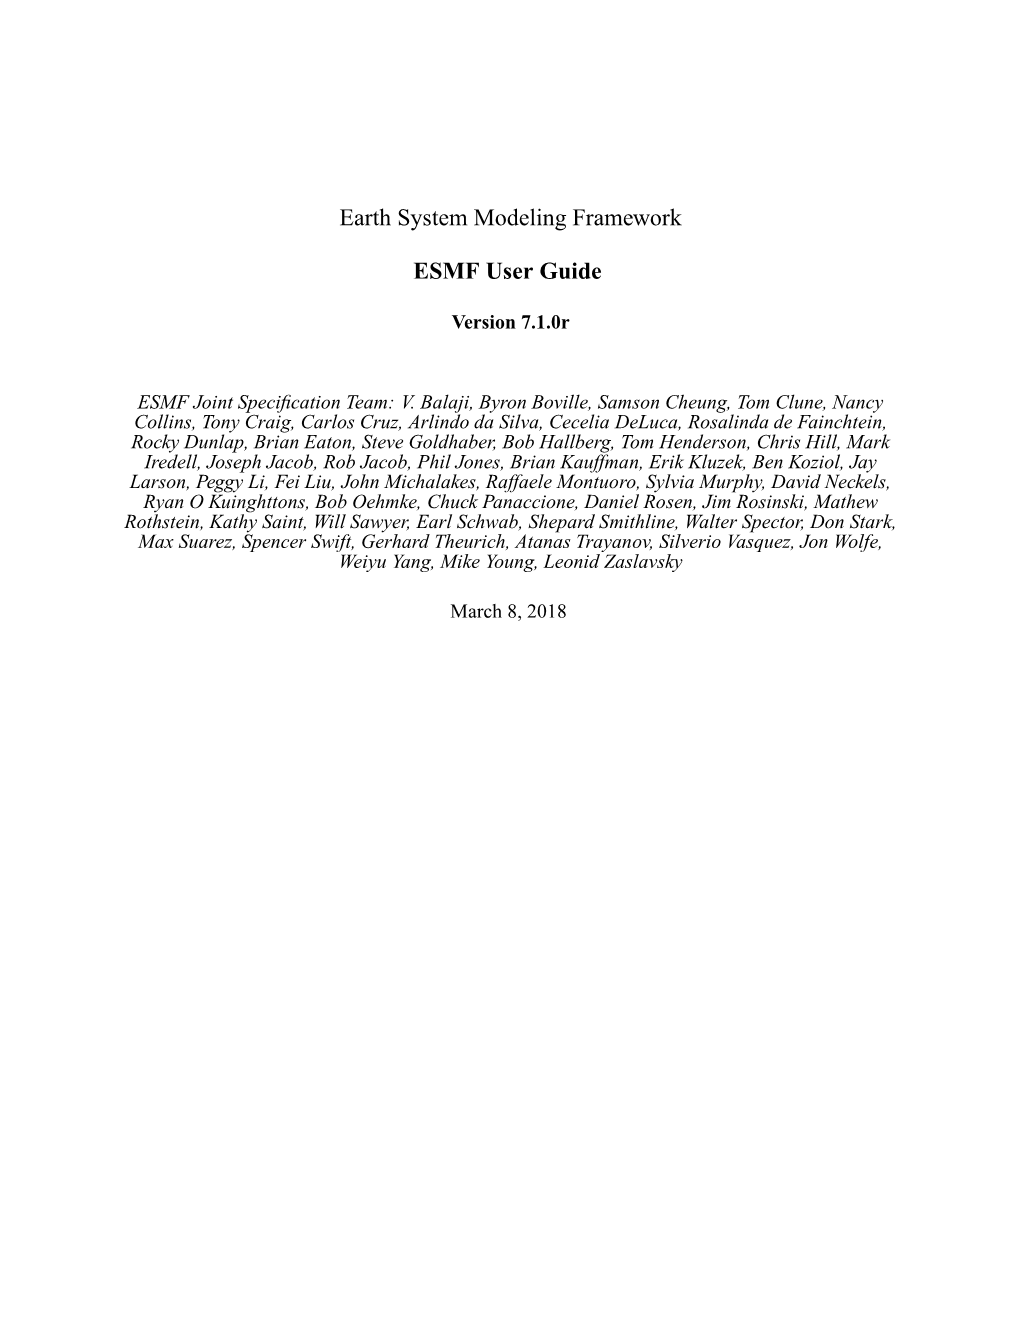 Earth System Modeling Framework ESMF User Guide